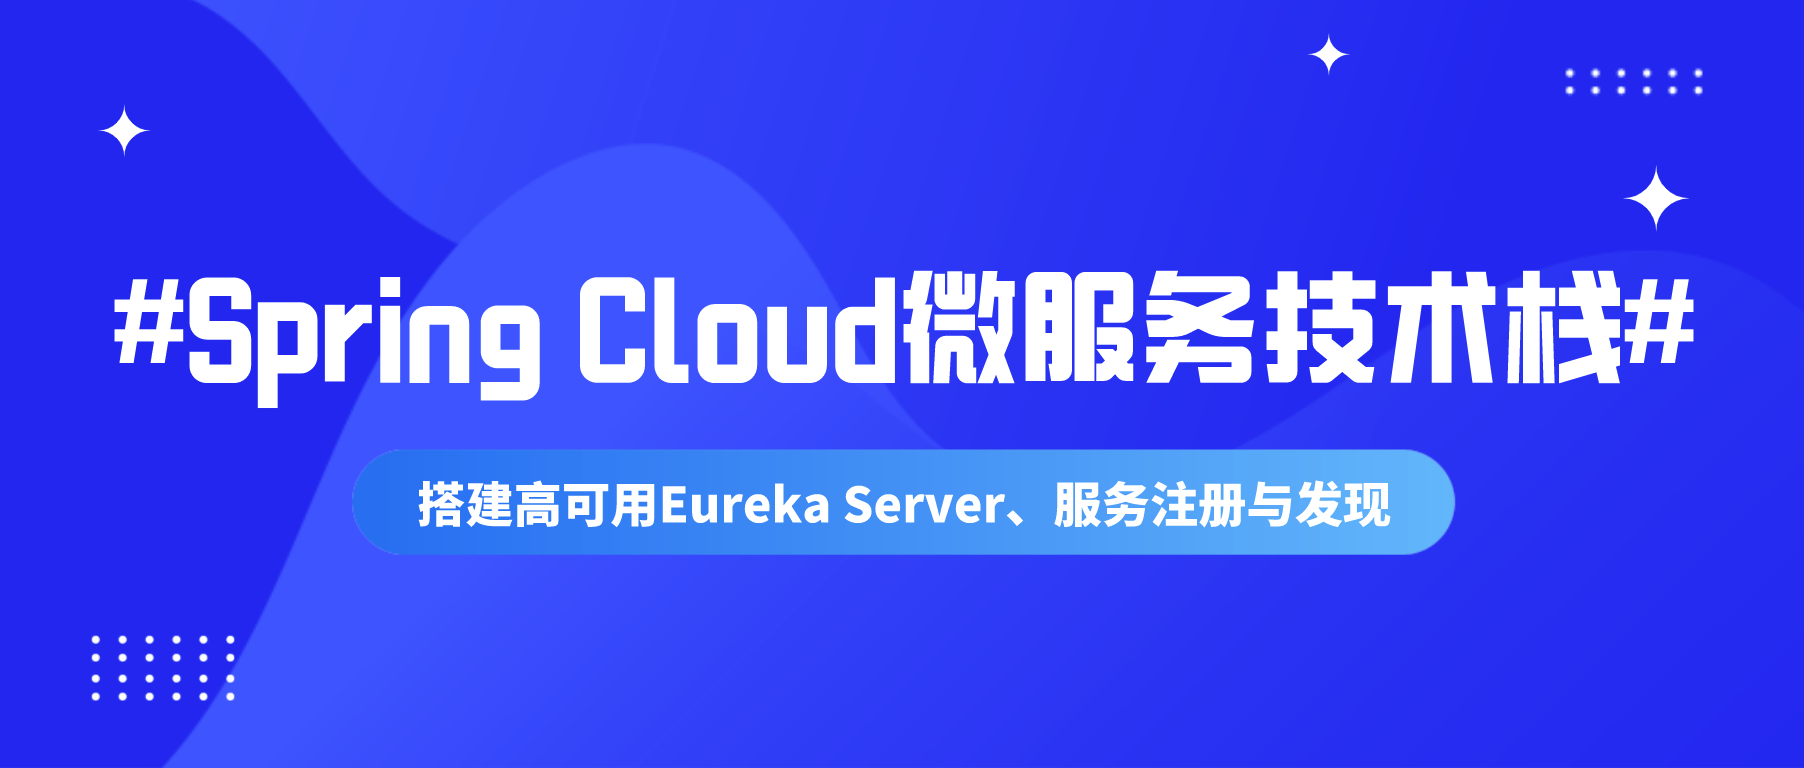 Spring Cloud微服务技术栈：搭建高可用Eureka Server、服务注册与发现